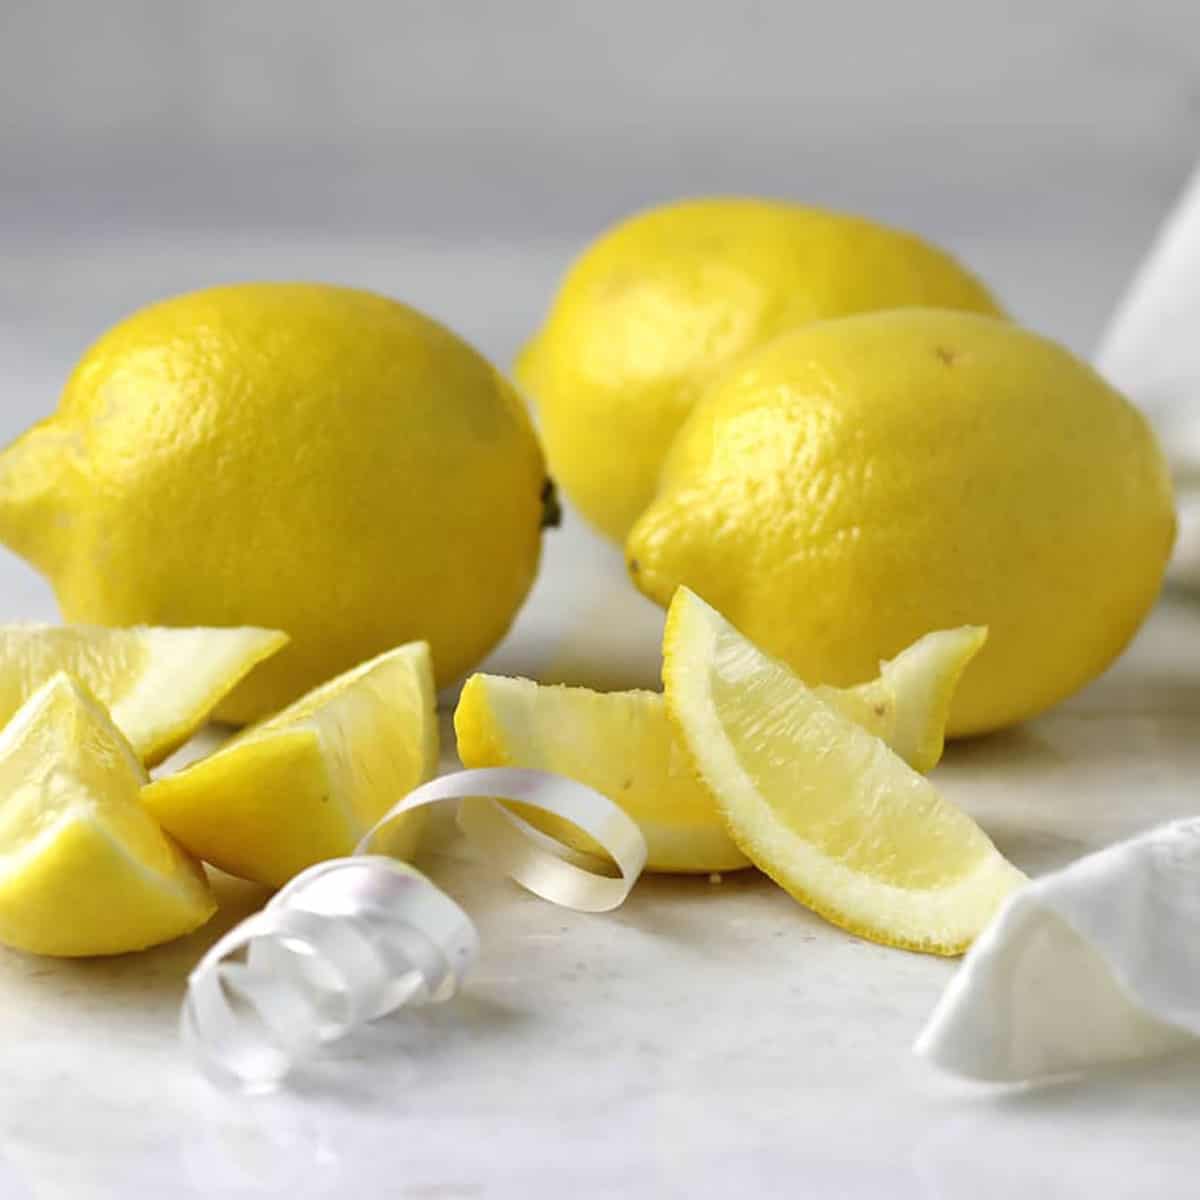 sliced lemons on a table.